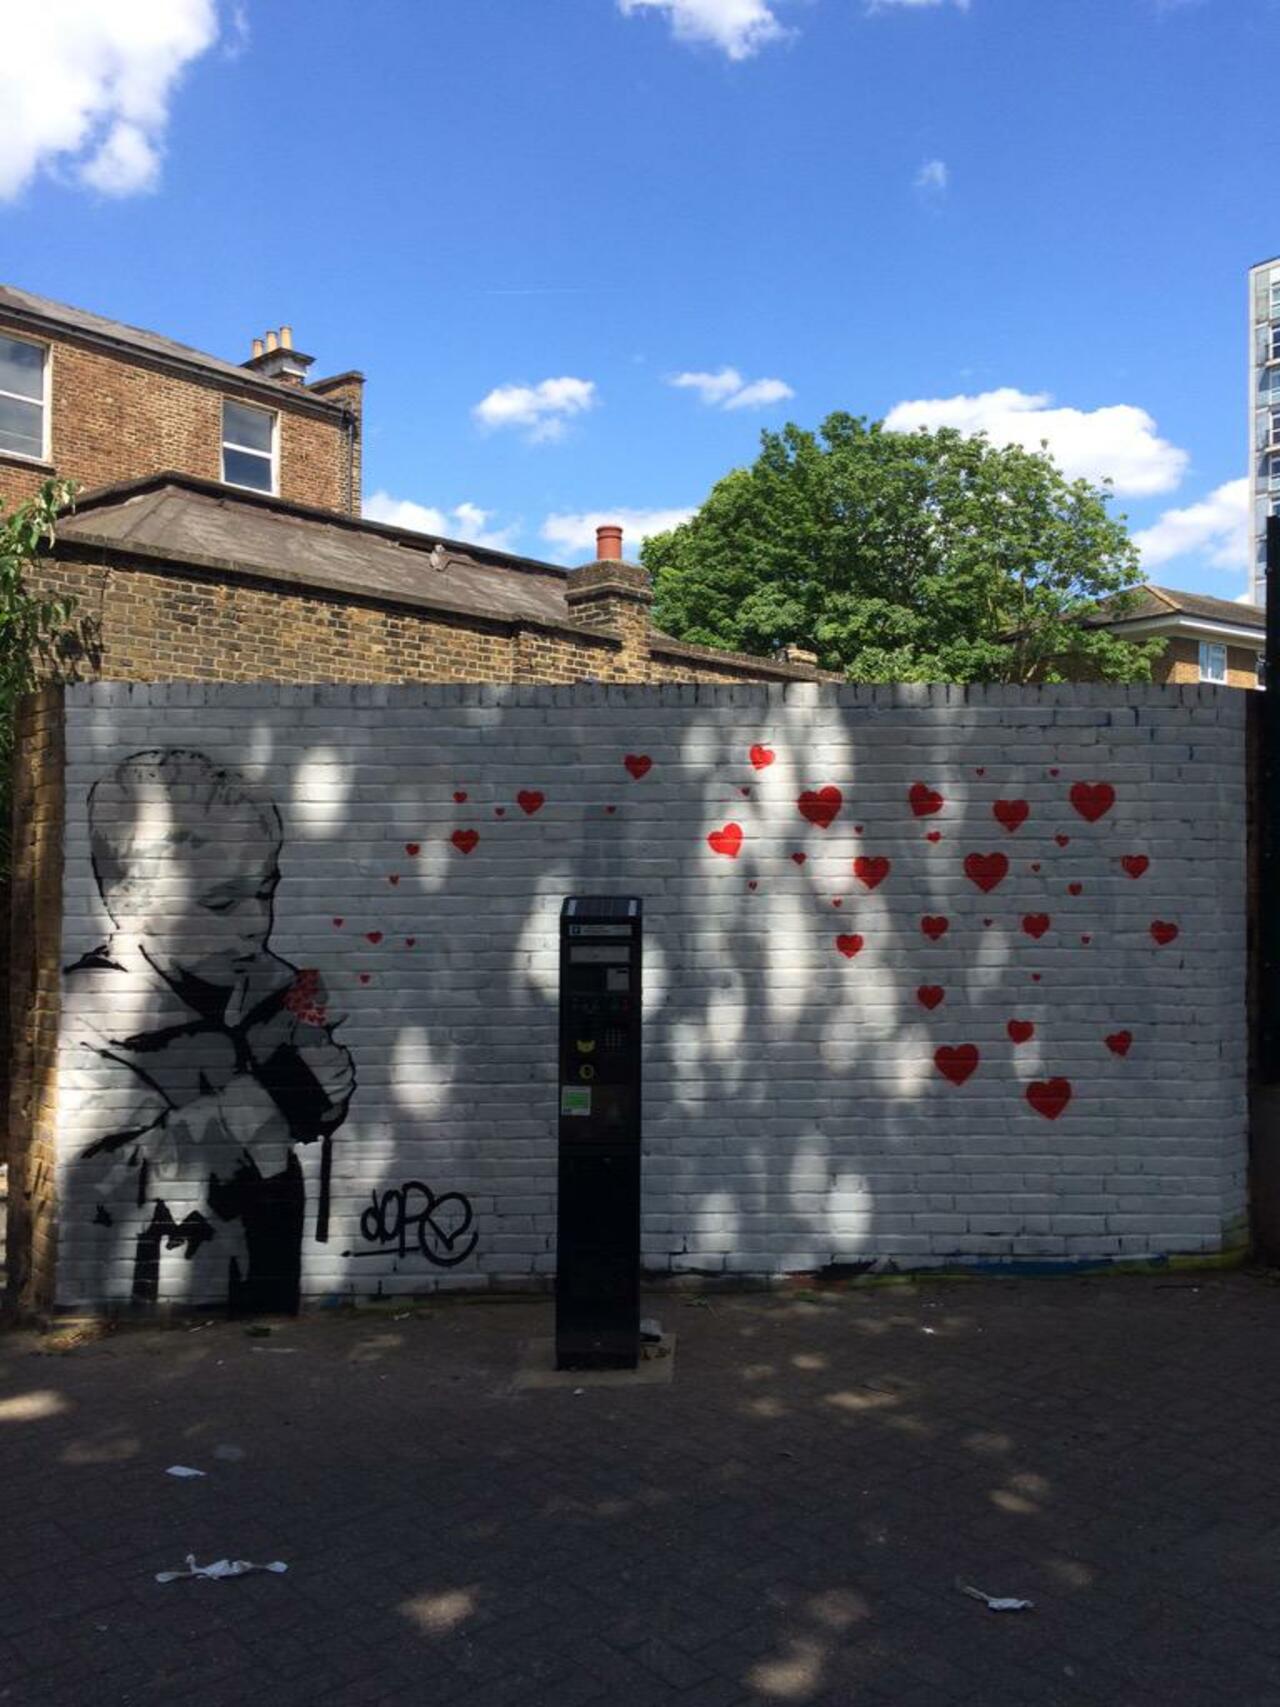 #PopBrixton #dope #Brixton #streetart #graffiti #dopeism #art http://t.co/86omXOmm6n